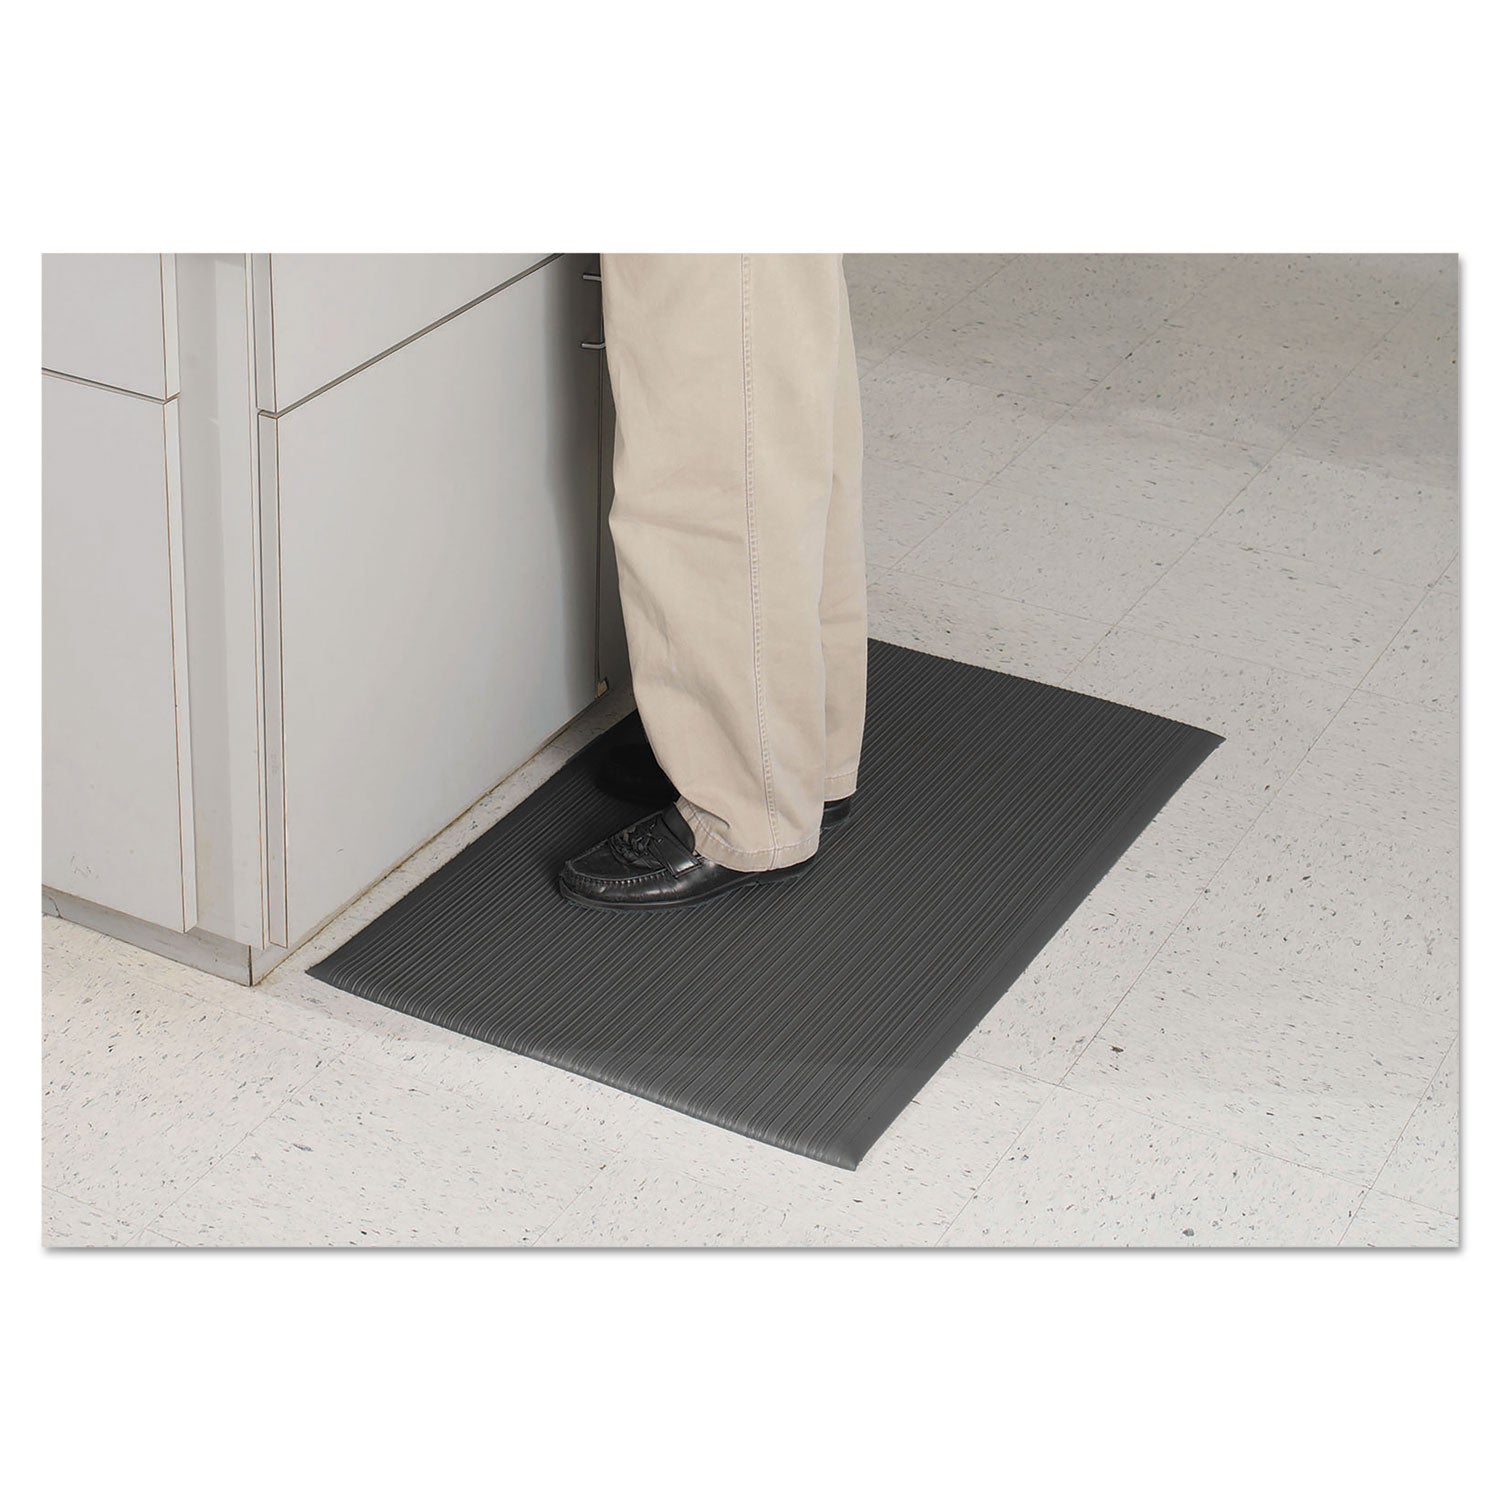 Air Step Antifatigue Mat, Polypropylene, 24 x 36, Black - 